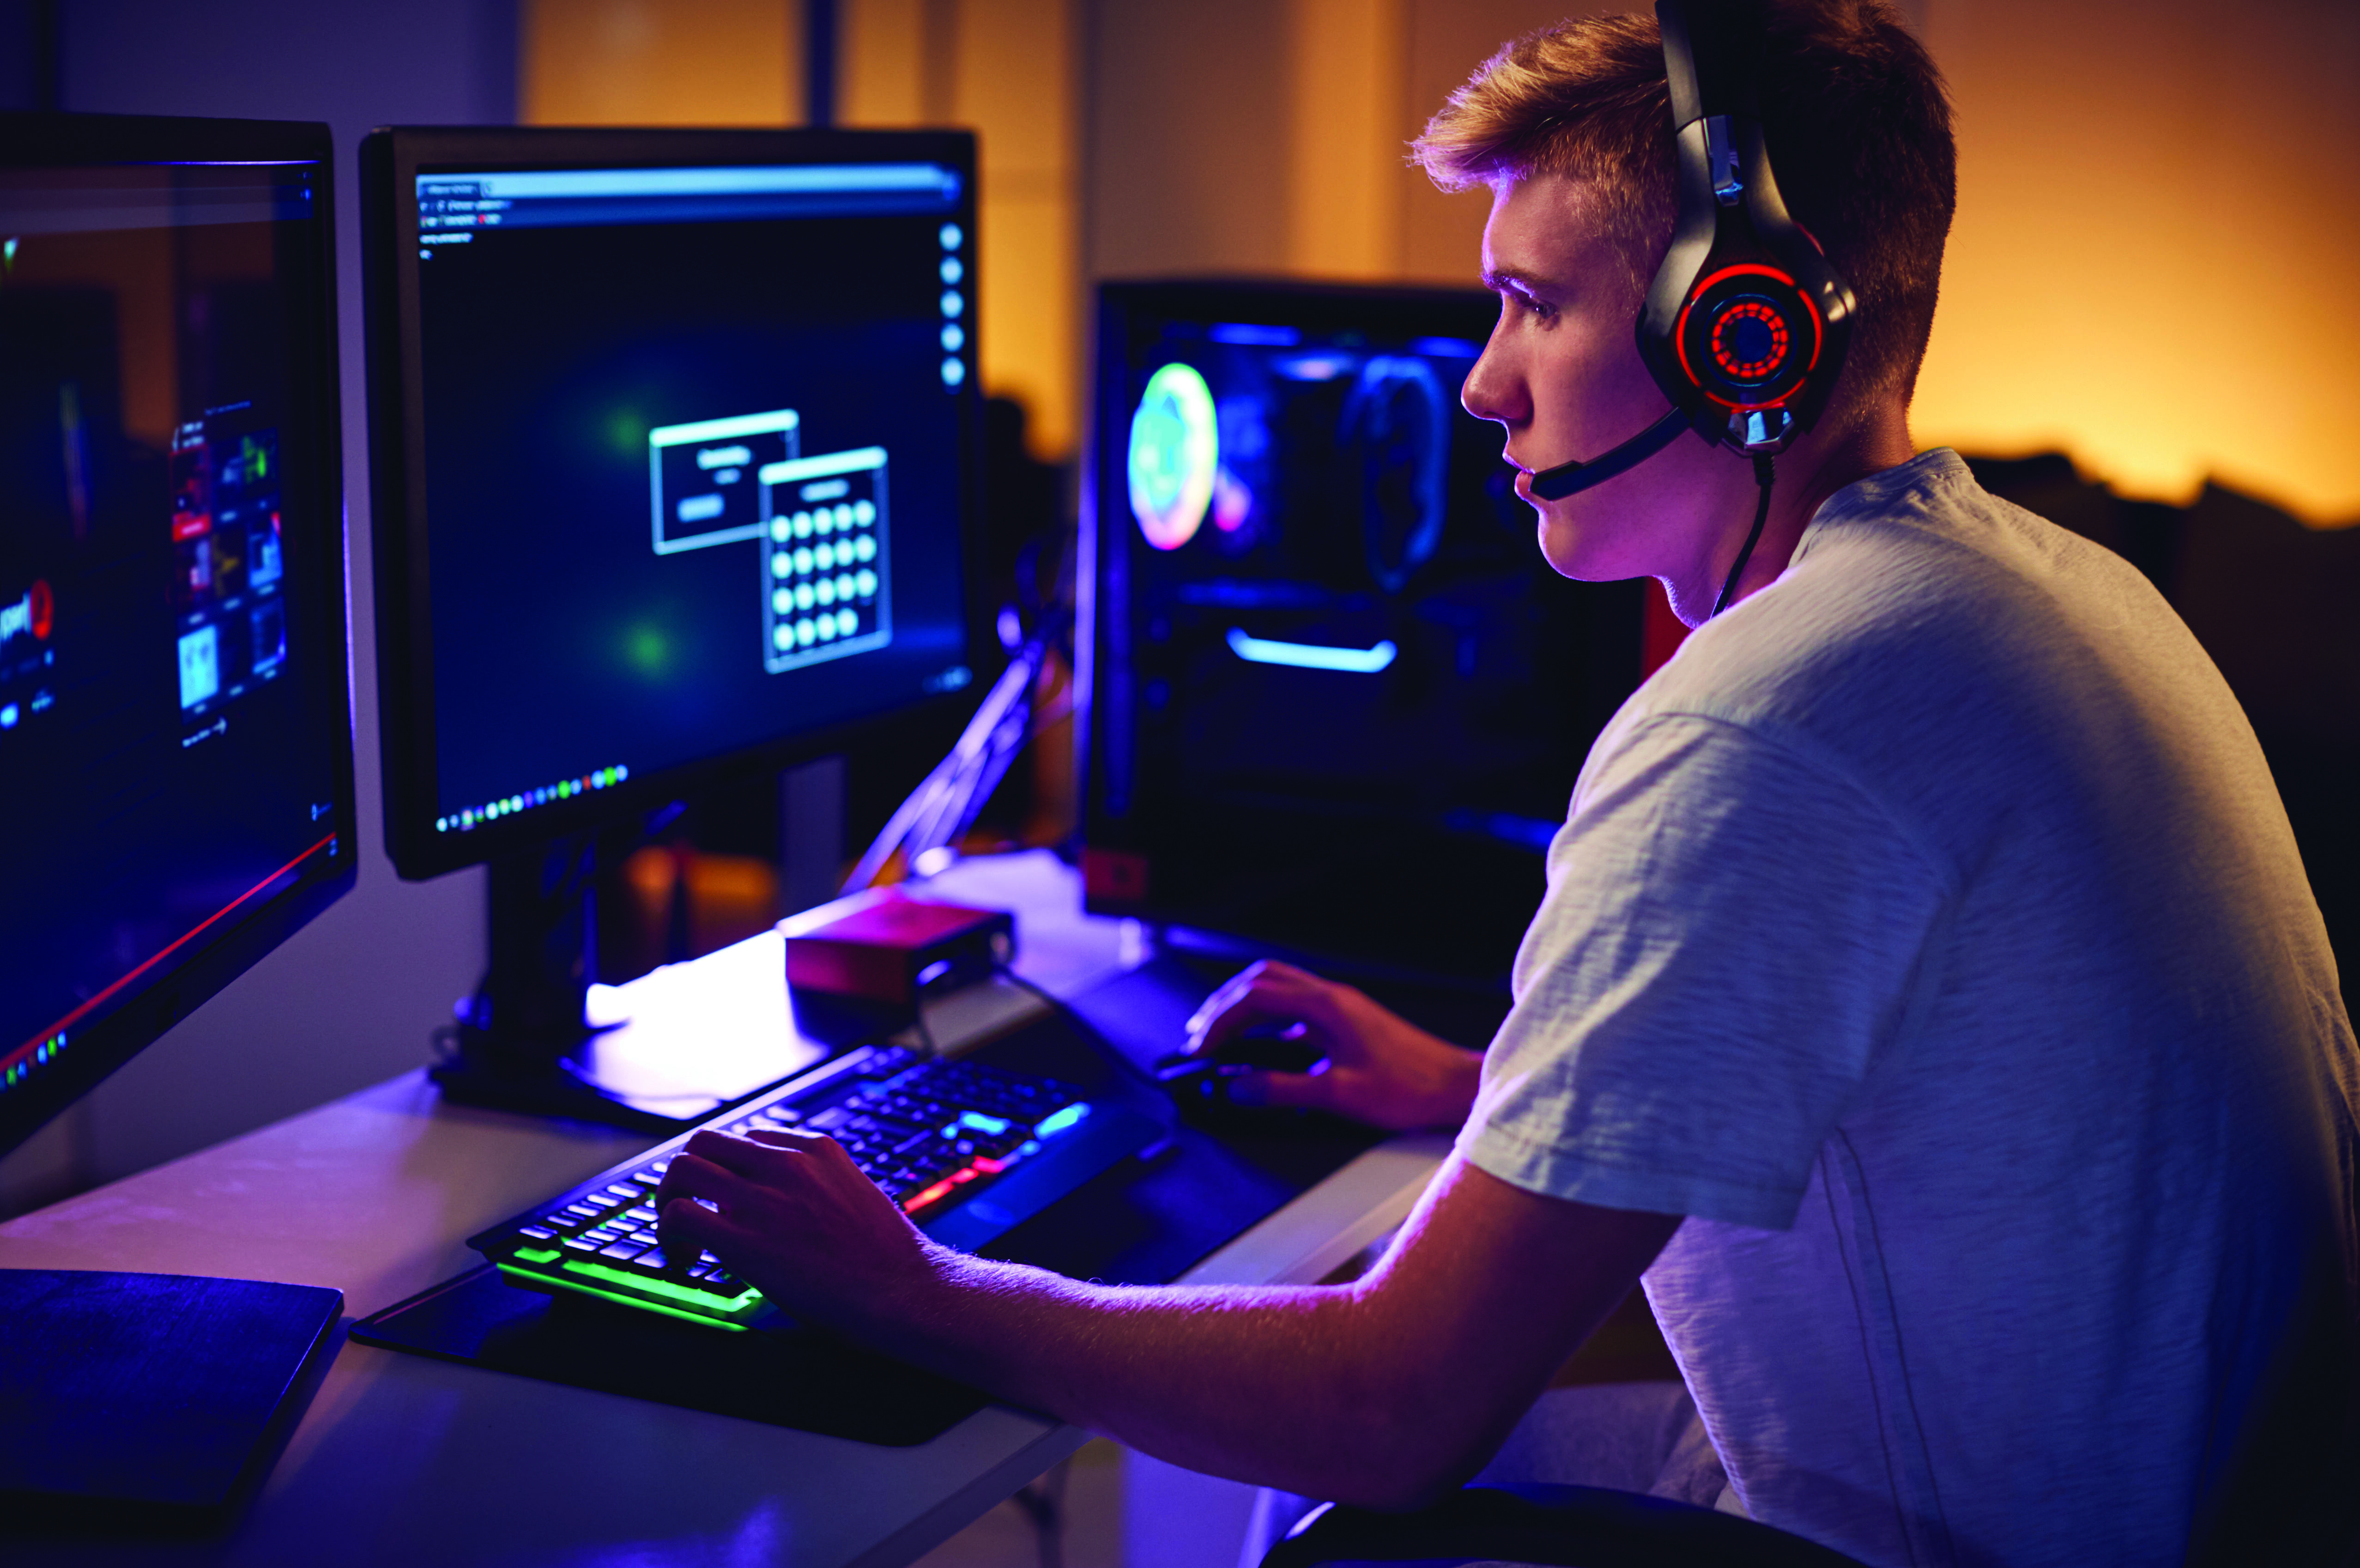 male-teenage-hacker-sitting-in-front-of-computer-s-2021-08-27-09-59-08-utc